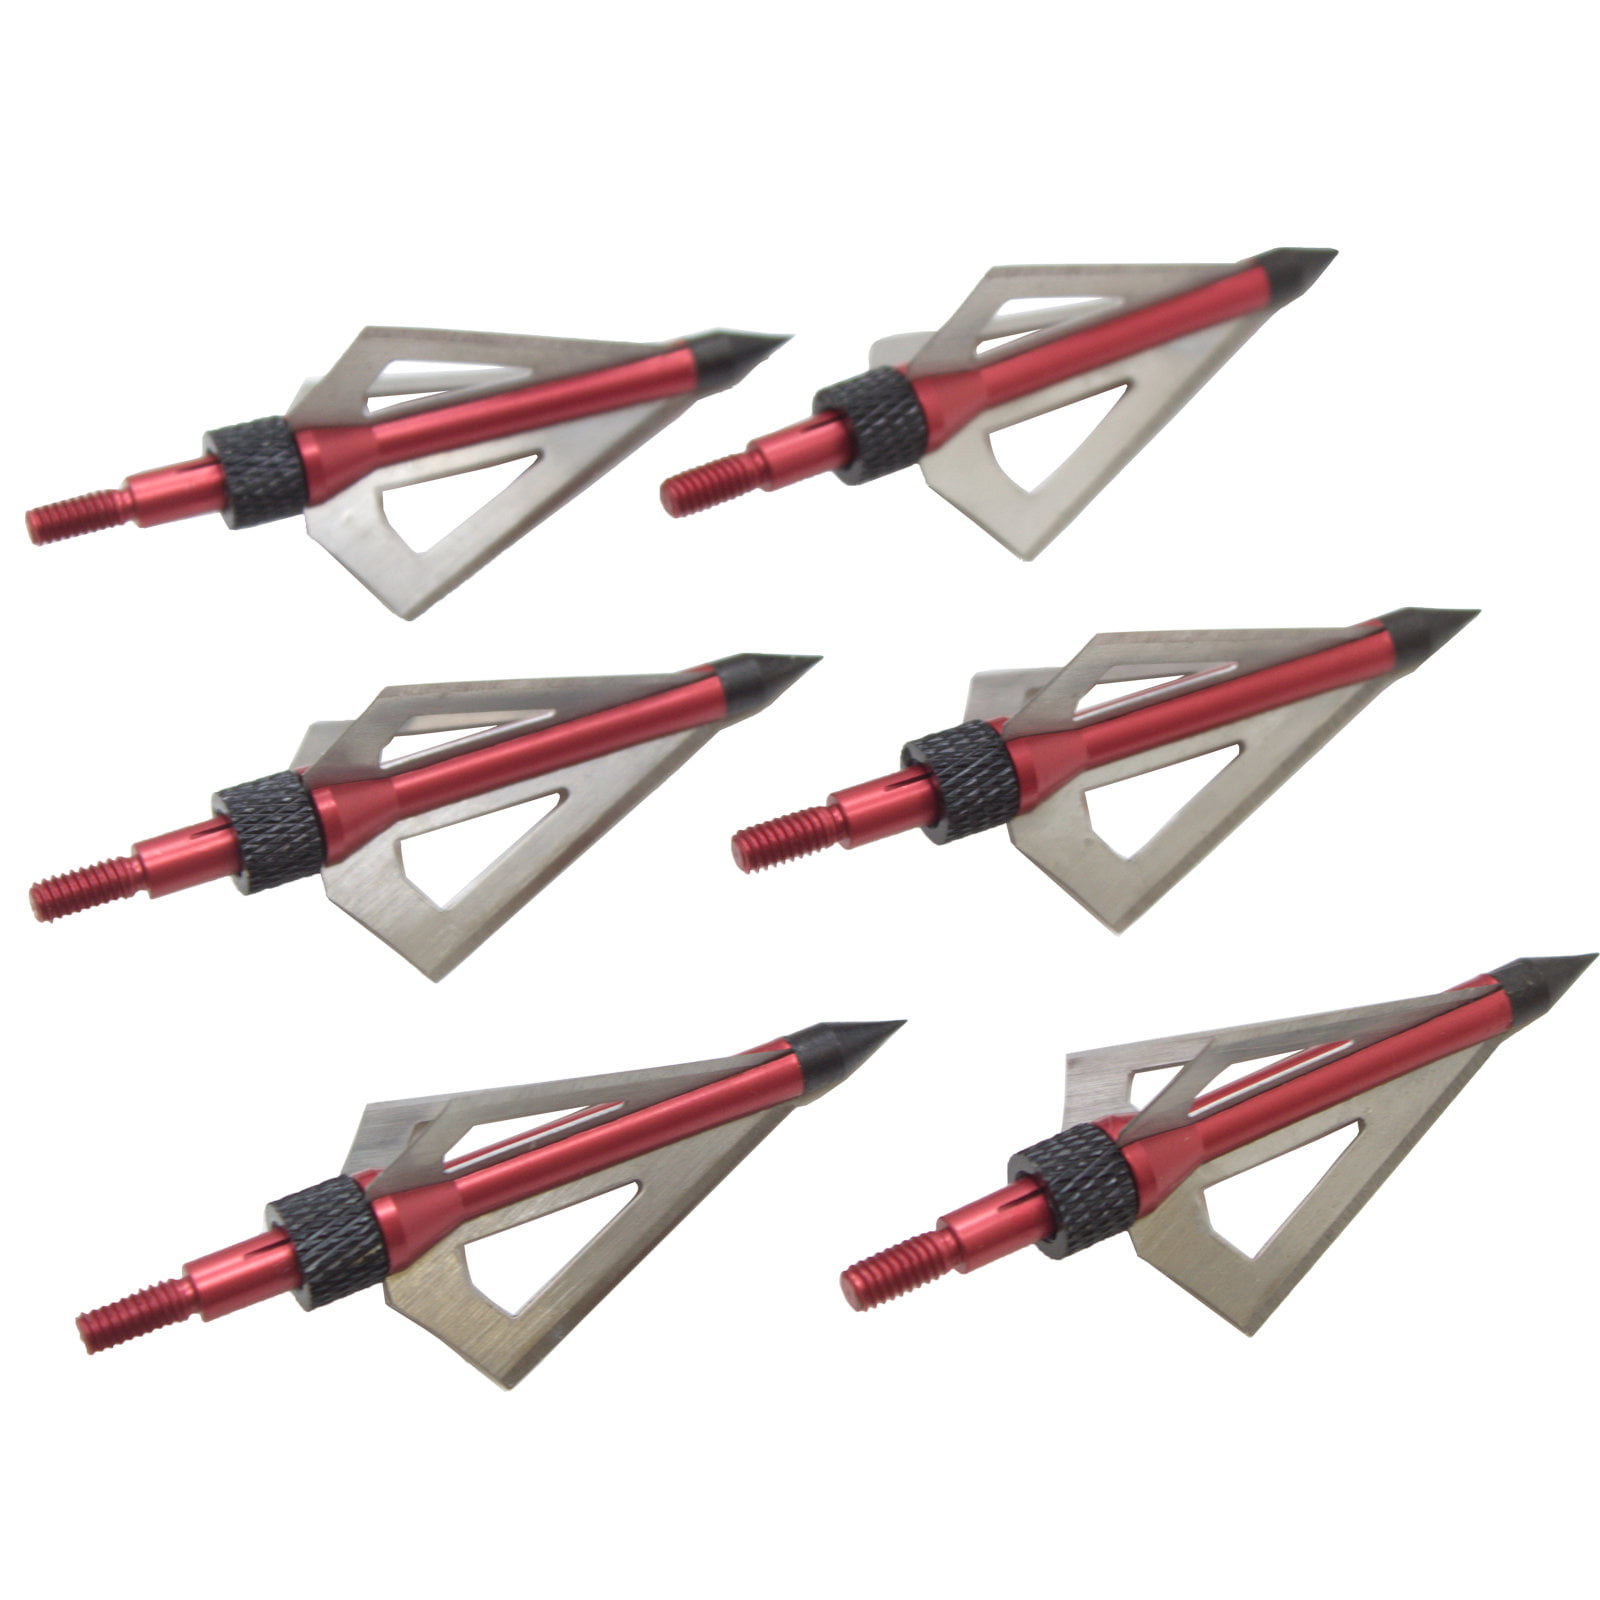 6x Sharp Broadheads 3 Blade Metal Black Archery hunting Arrow Tips 100 Grains 